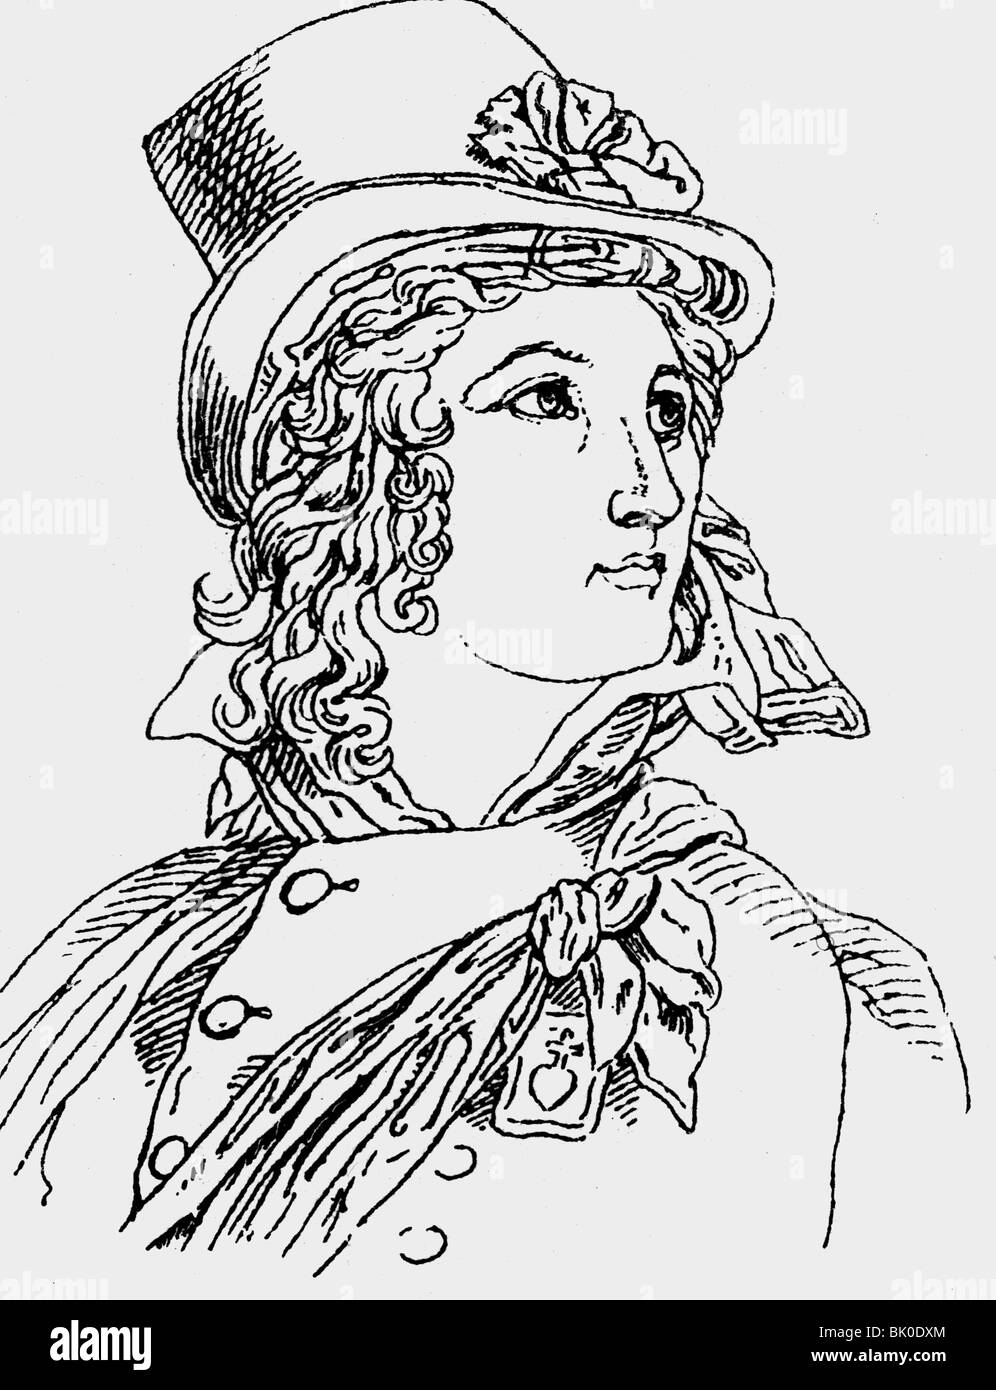 Rochejaquelein, Henri de la, 30.8.1772 - 26.1.1794, French general, commander of the Royal and Catholic Armies, portrait, pen drawing, 19th century,  , Stock Photo